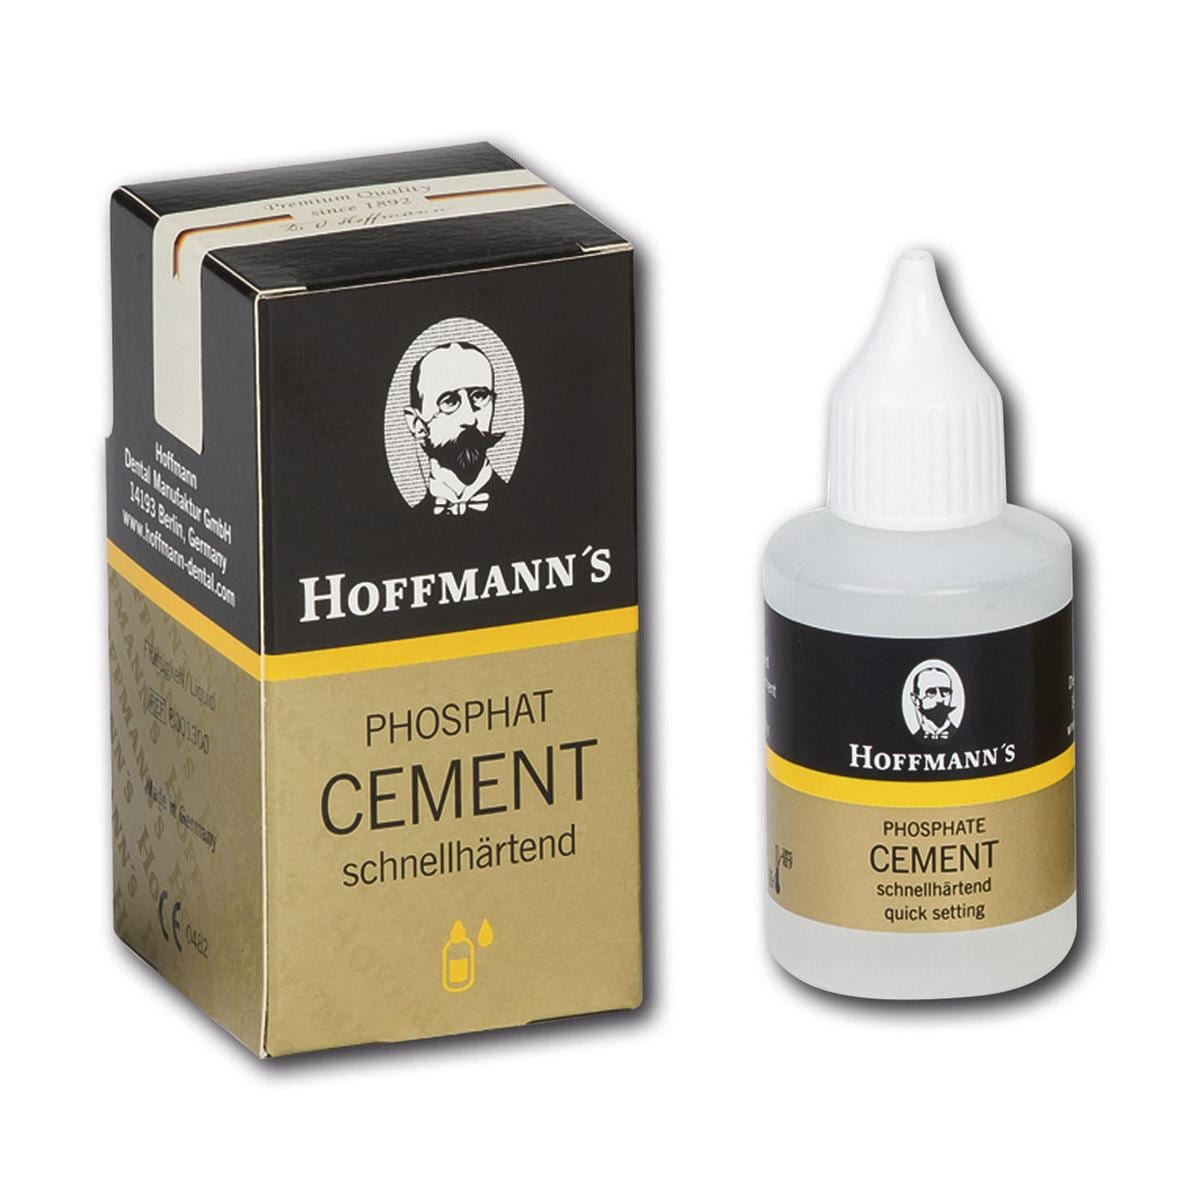 Hoffmans phosphate ciment - liquide - Flacon, 40 ml, fast